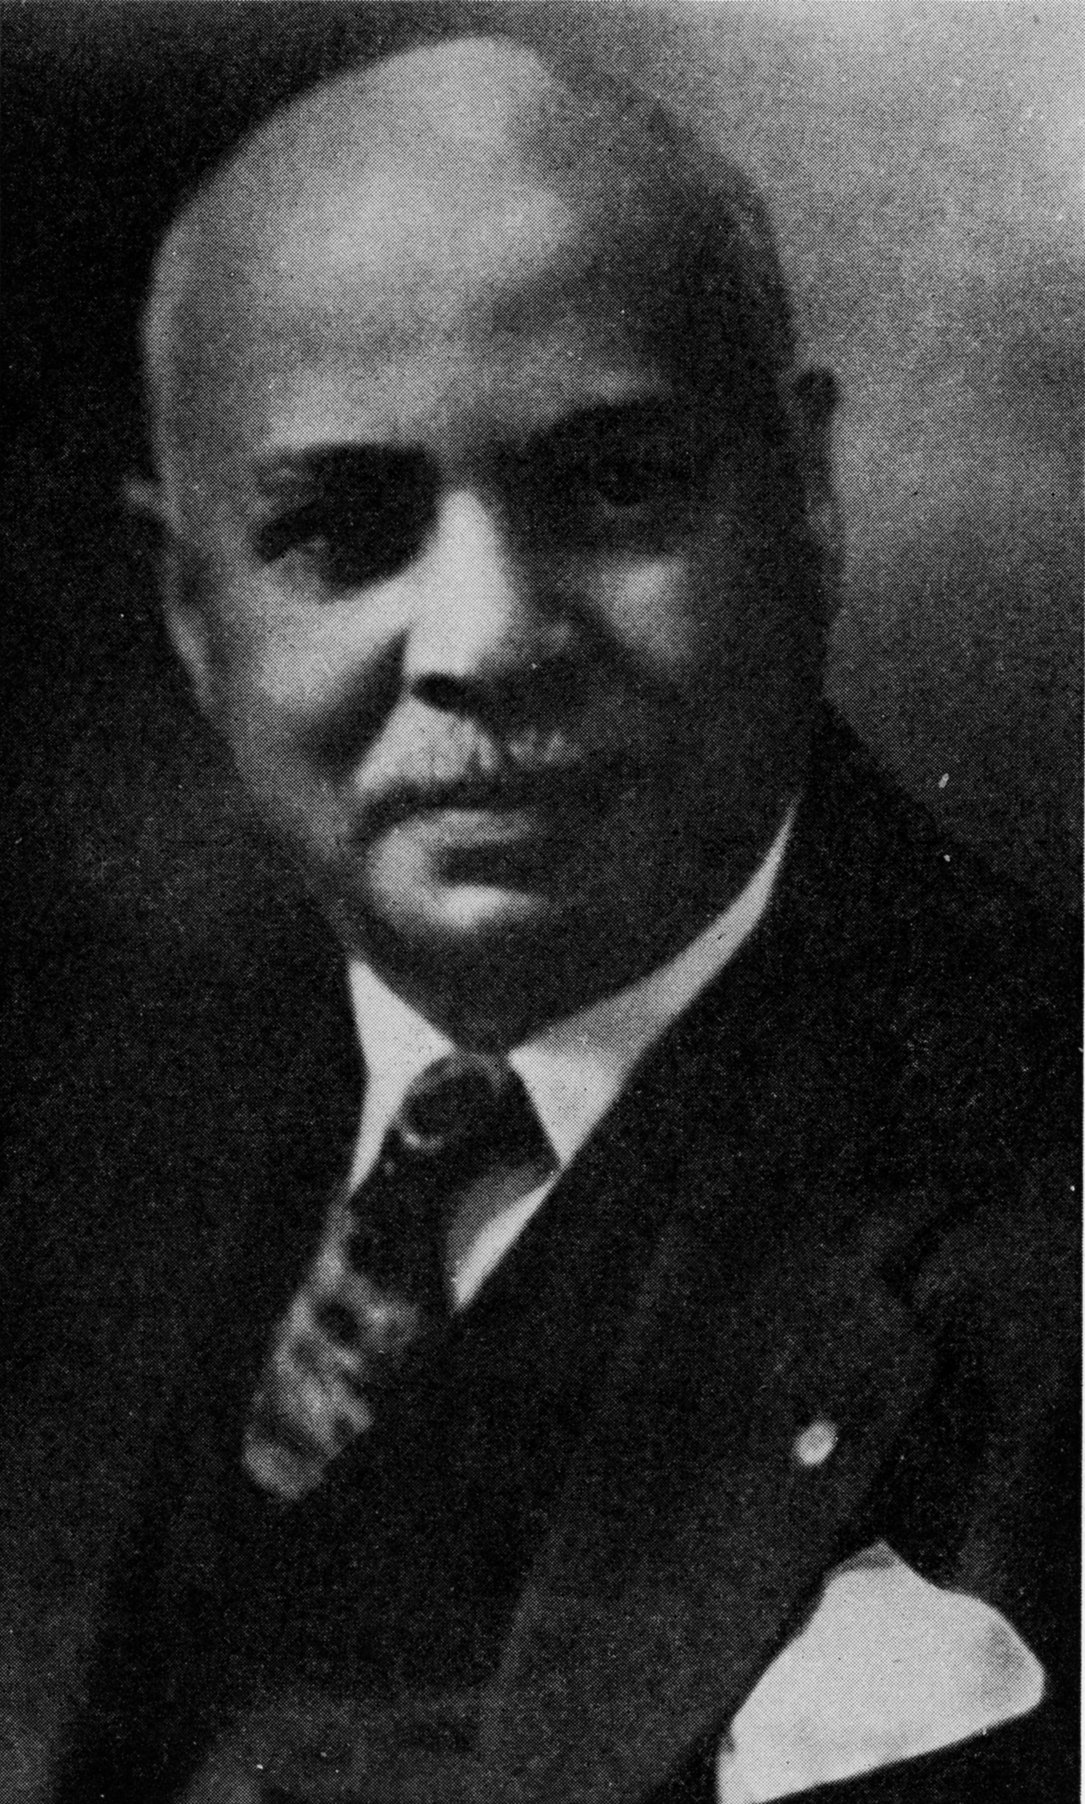 photographic portrait of William C. Handy